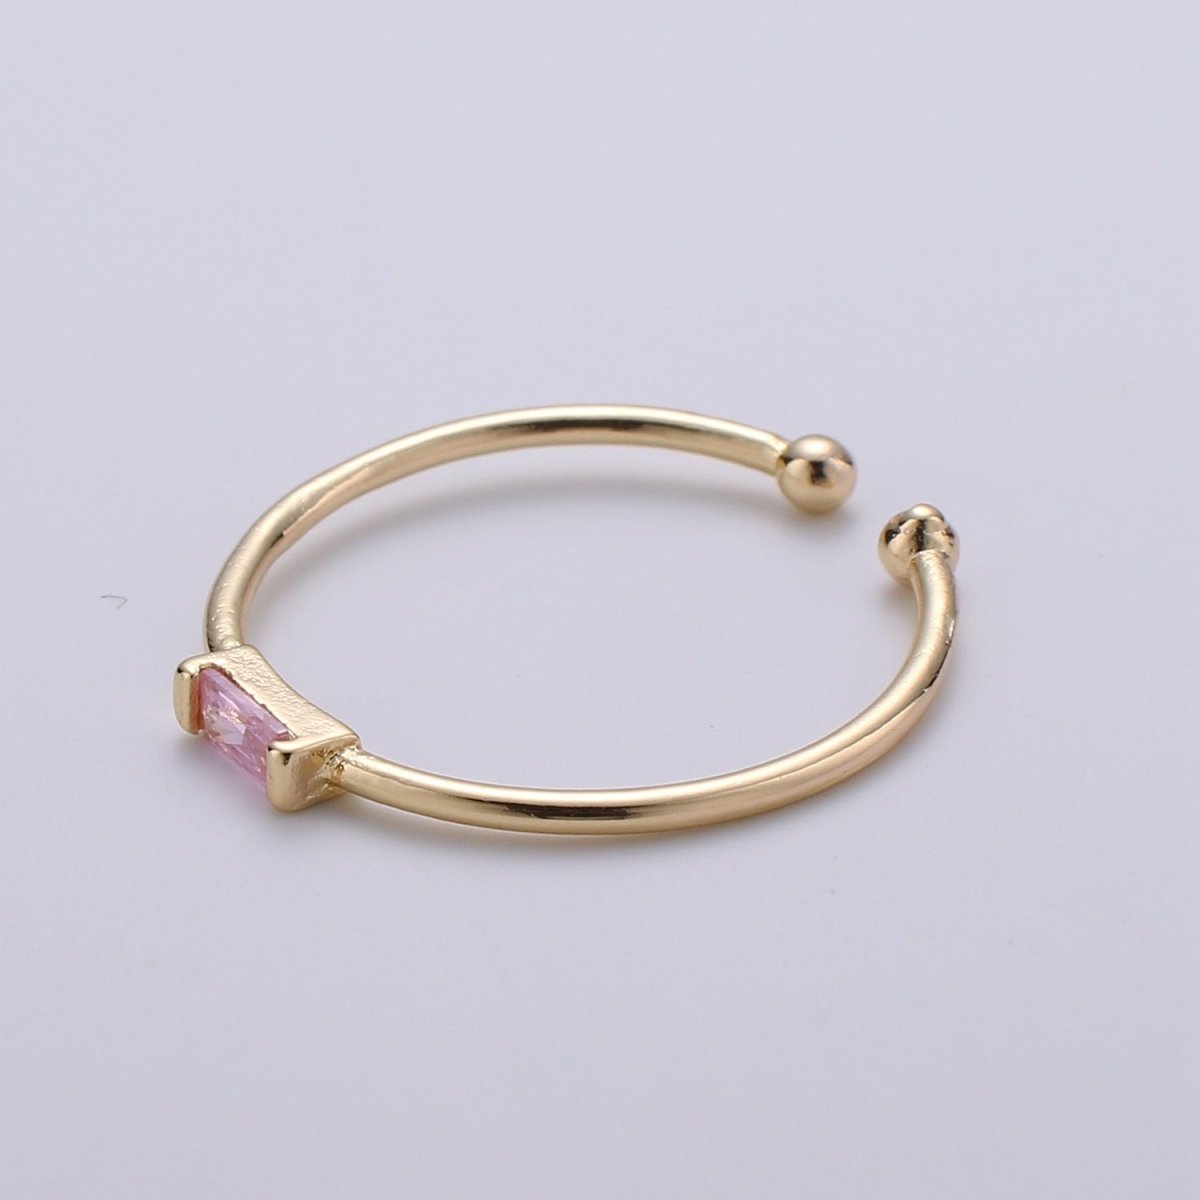 Minimalist Birthstone Ring • Cz Ring in Gold • Dainty Birthstone Ring • Stacking Ring • Valentine Gifts for Mom Wife Friend R-215 R-216 R-218 R-219 R-220 R-223 R-225 - DLUXCA